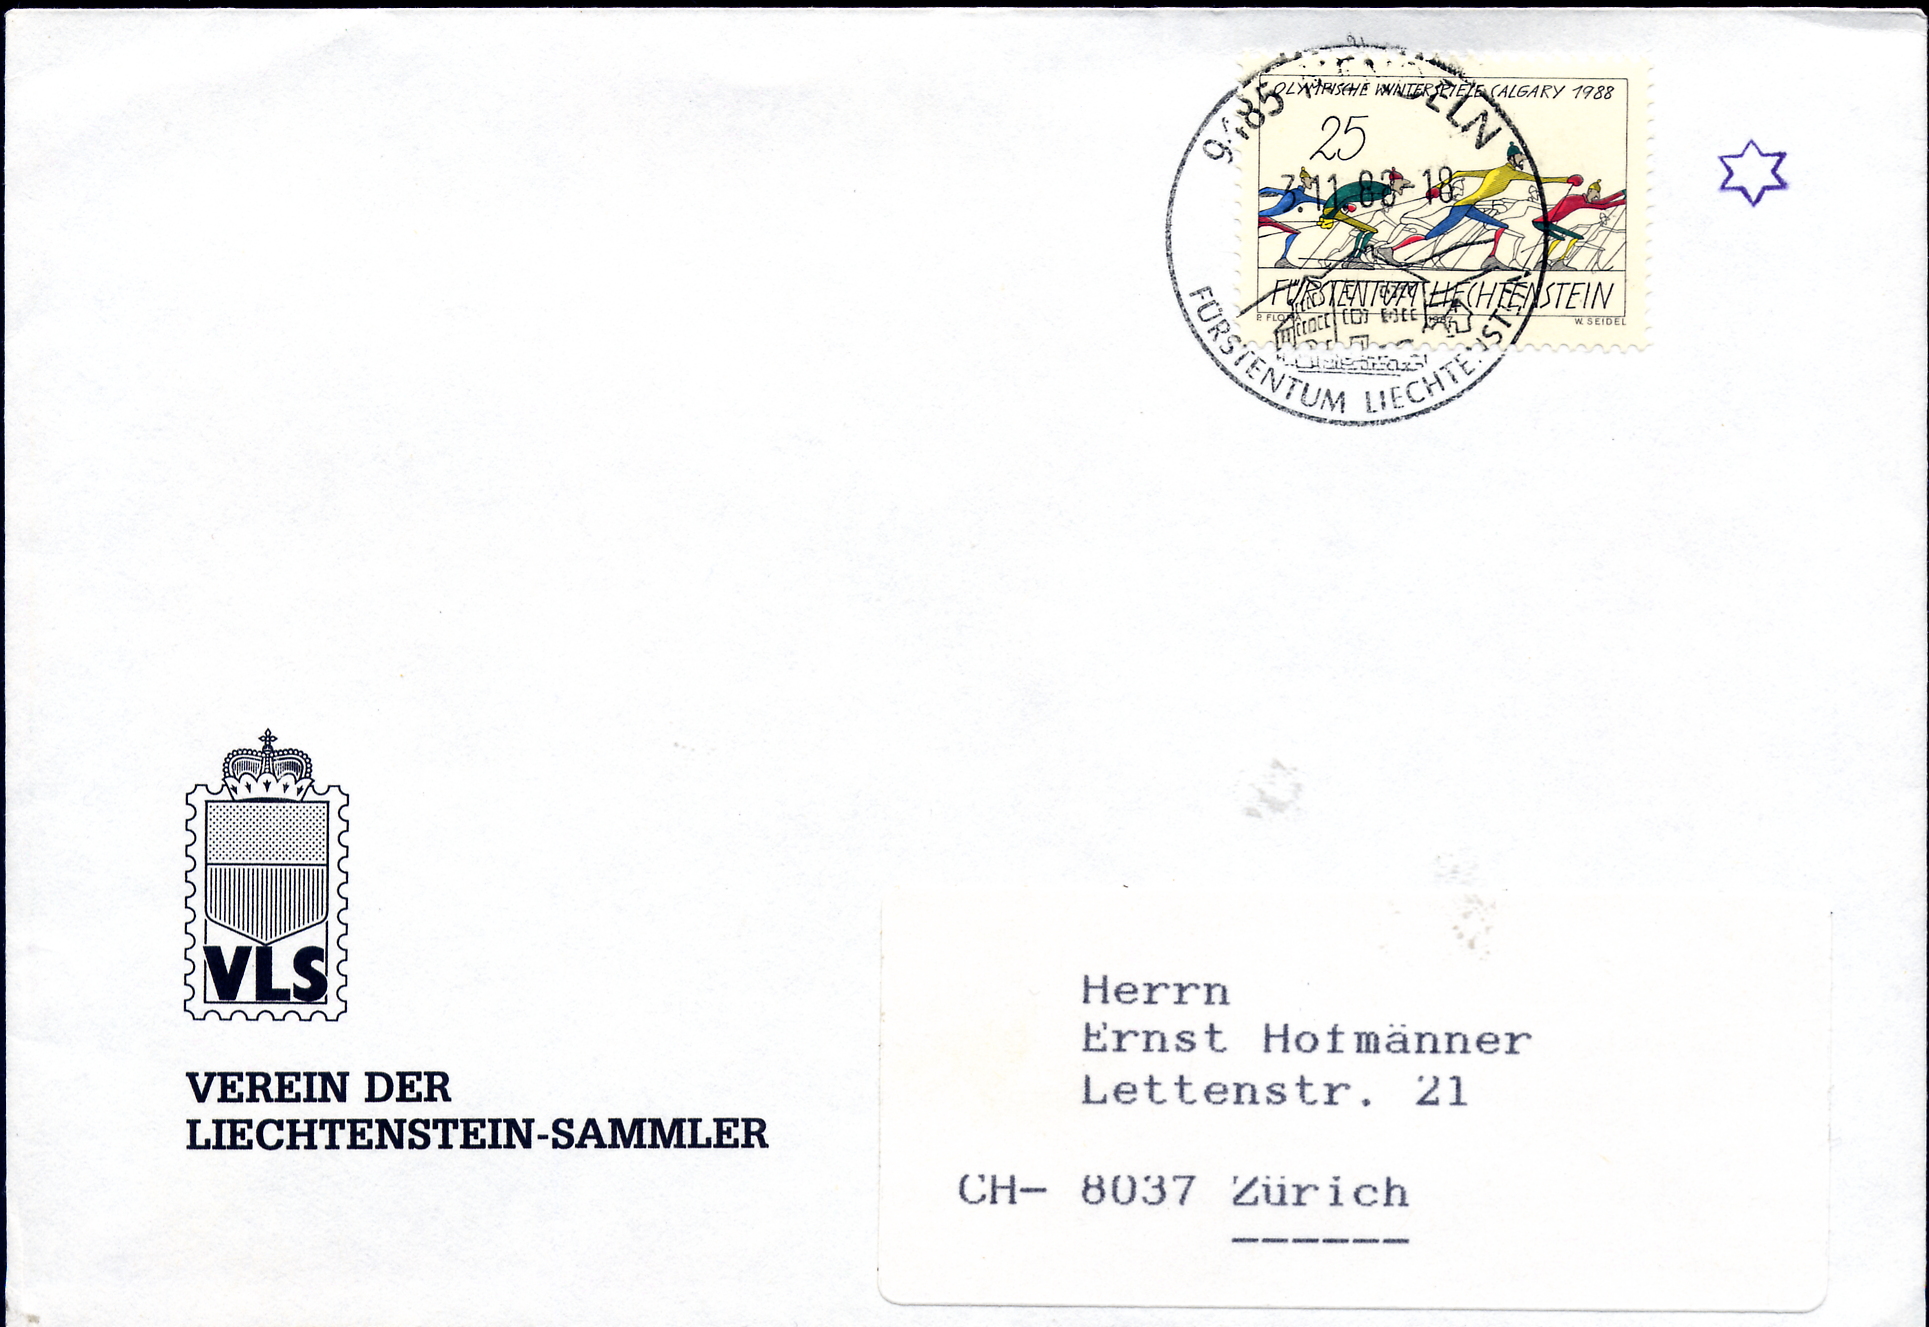 https://swiss-stamps.org/wp-content/uploads/2023/12/1988-11-VLS-Nendeln.jpg